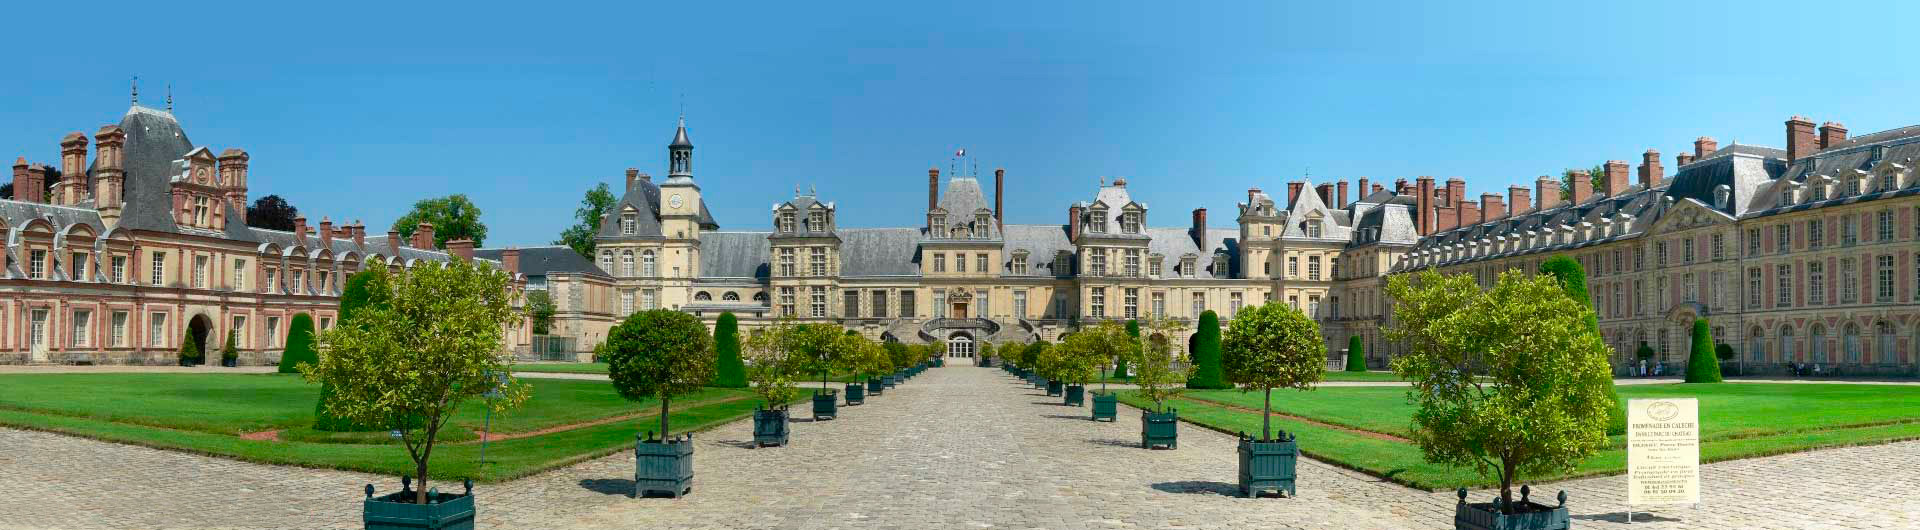 Guided tour of the Château de Fontainebleau